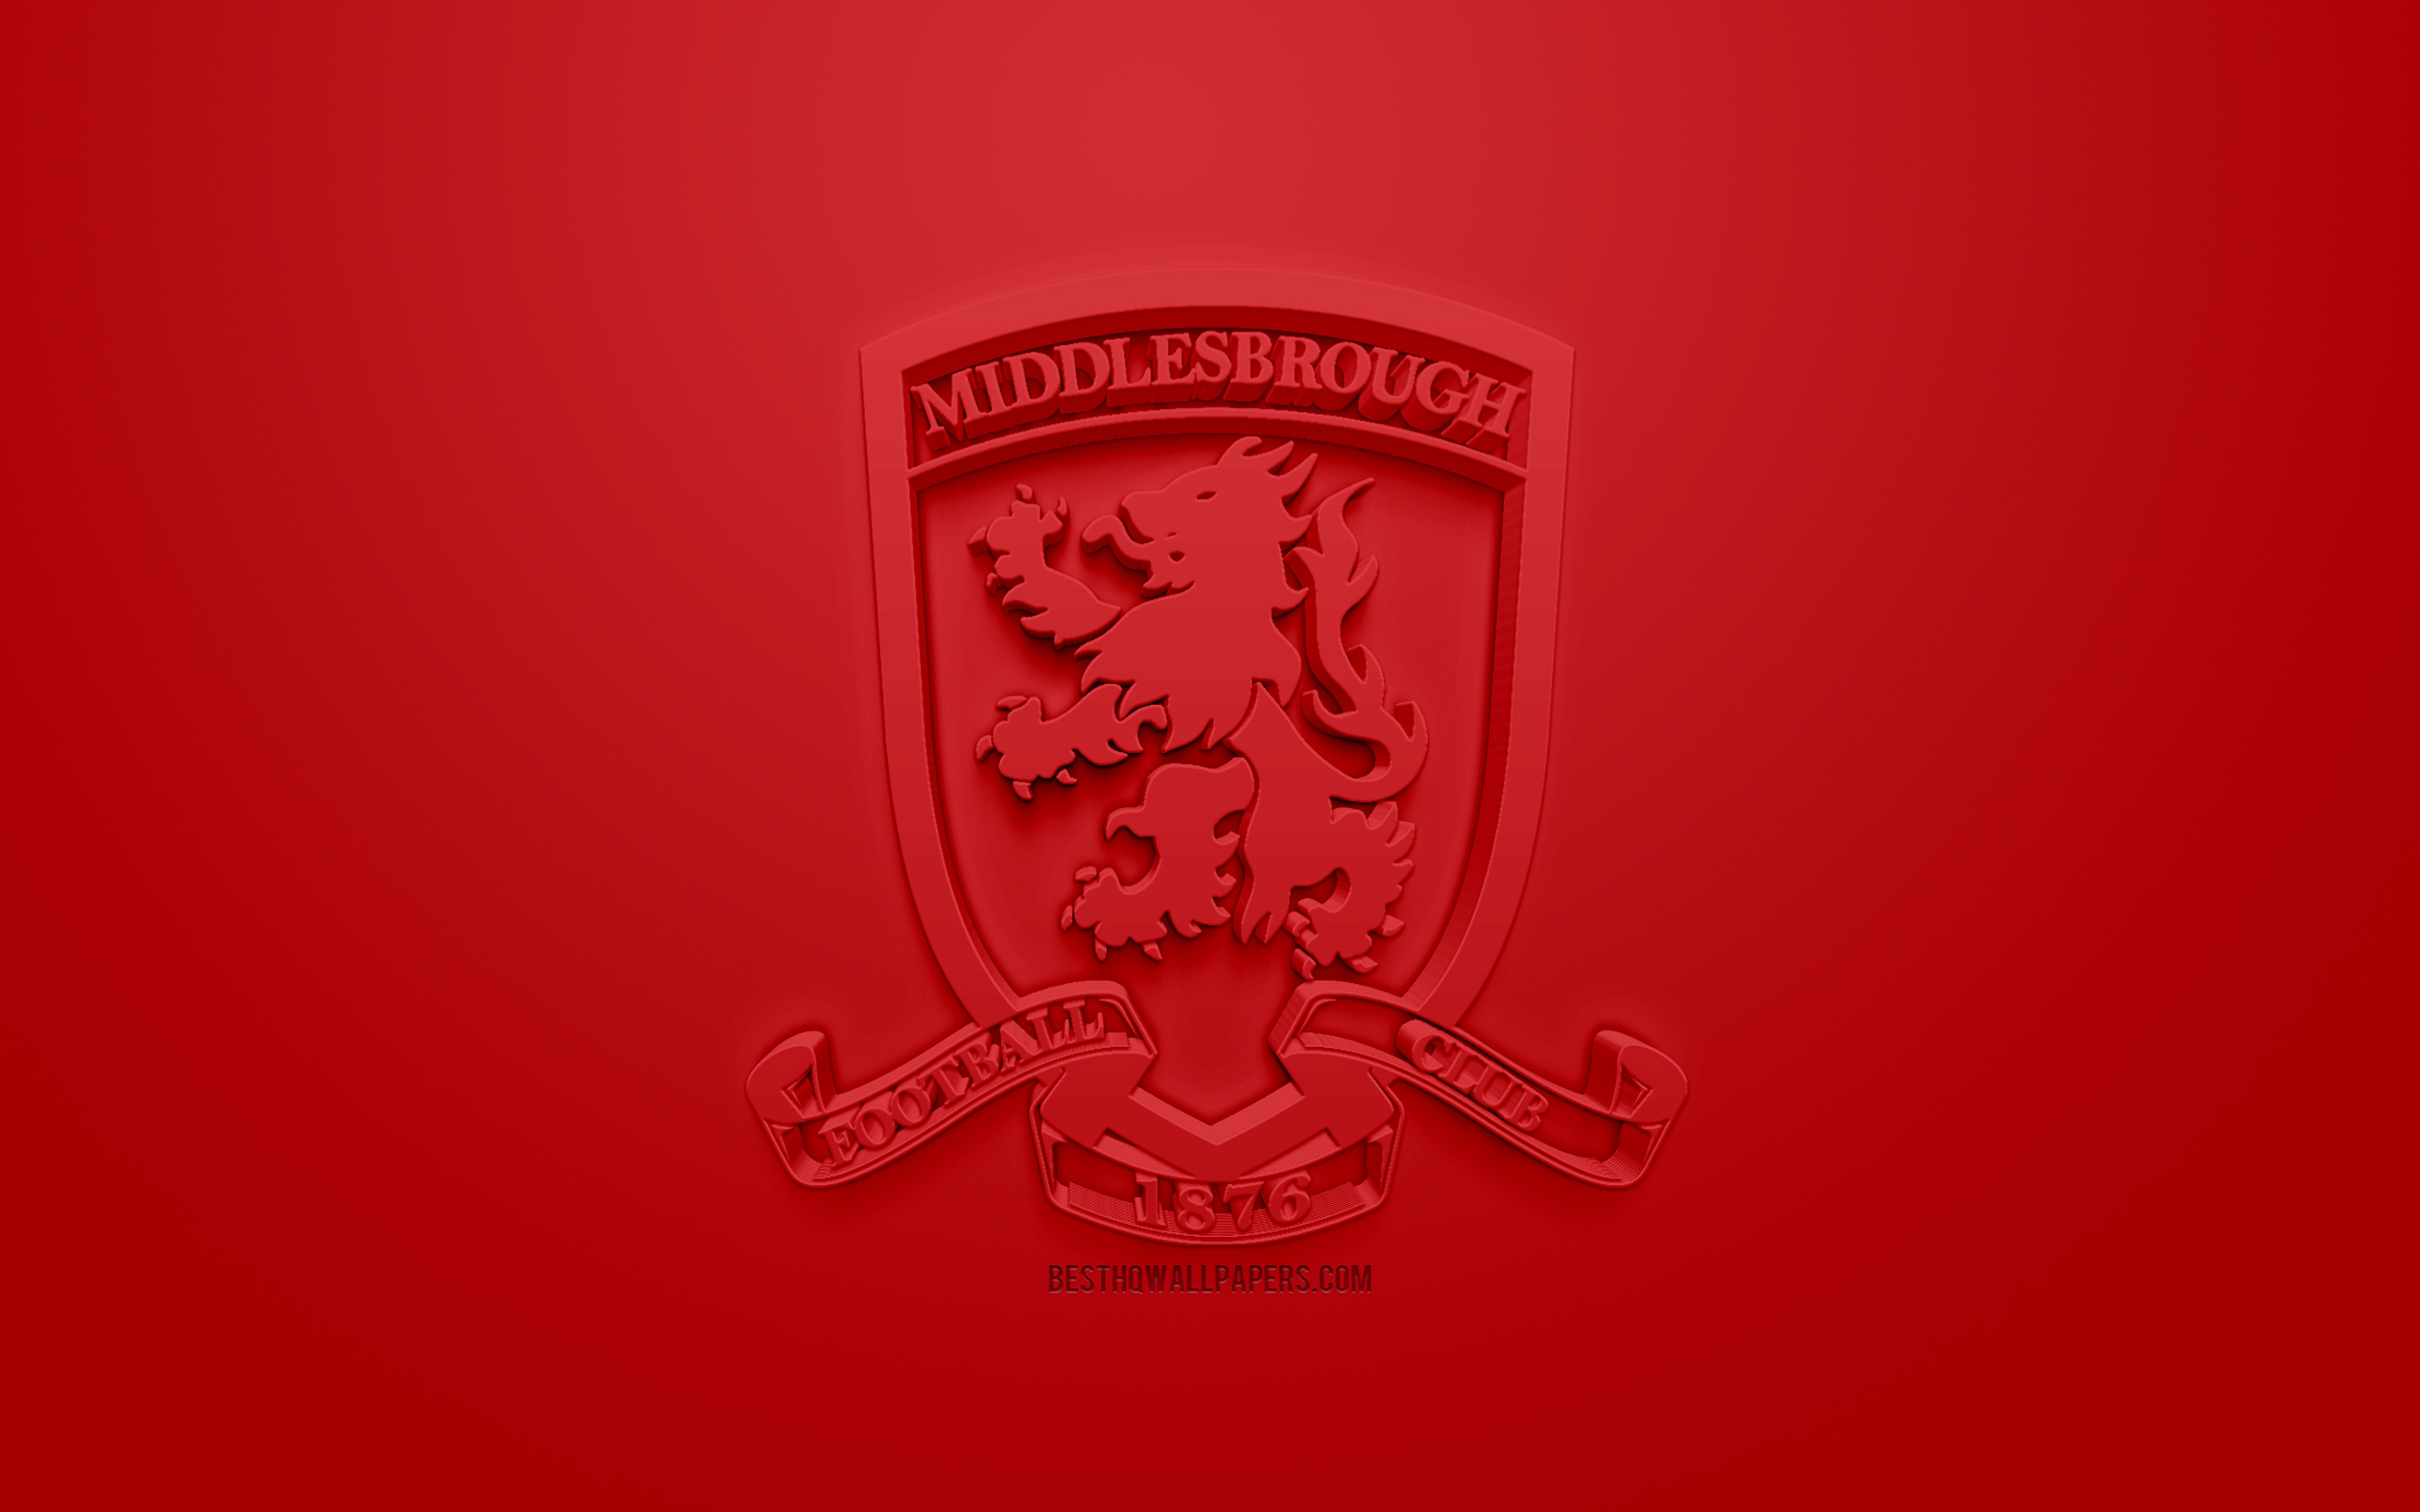 Download wallpaper Middlesbrough FC, creative 3D logo, red background, 3D emblem, English football club, EFL Championship, Middlesbrough, England, United Kingdom, English Football League Championship, 3D art, football, 3D logo for desktop with